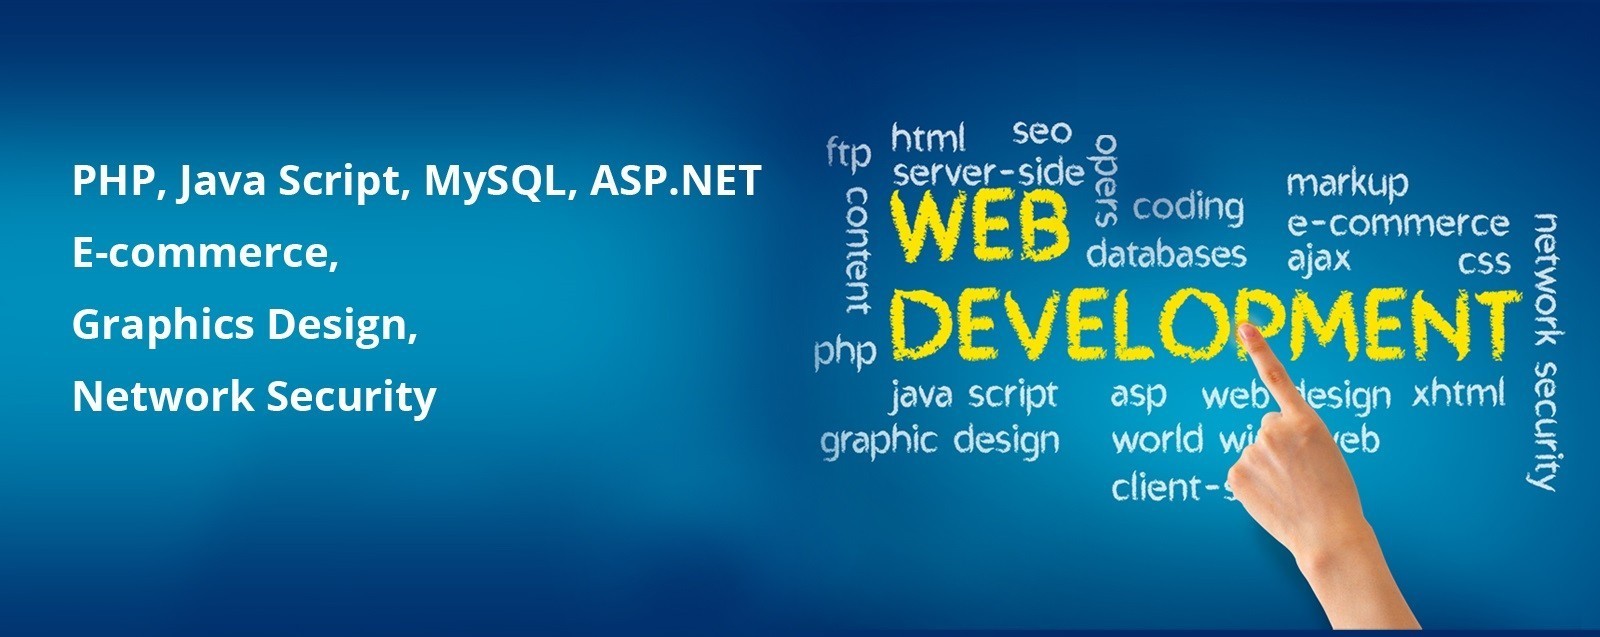 Web Designing and Web Development CompanySoftware Development Company